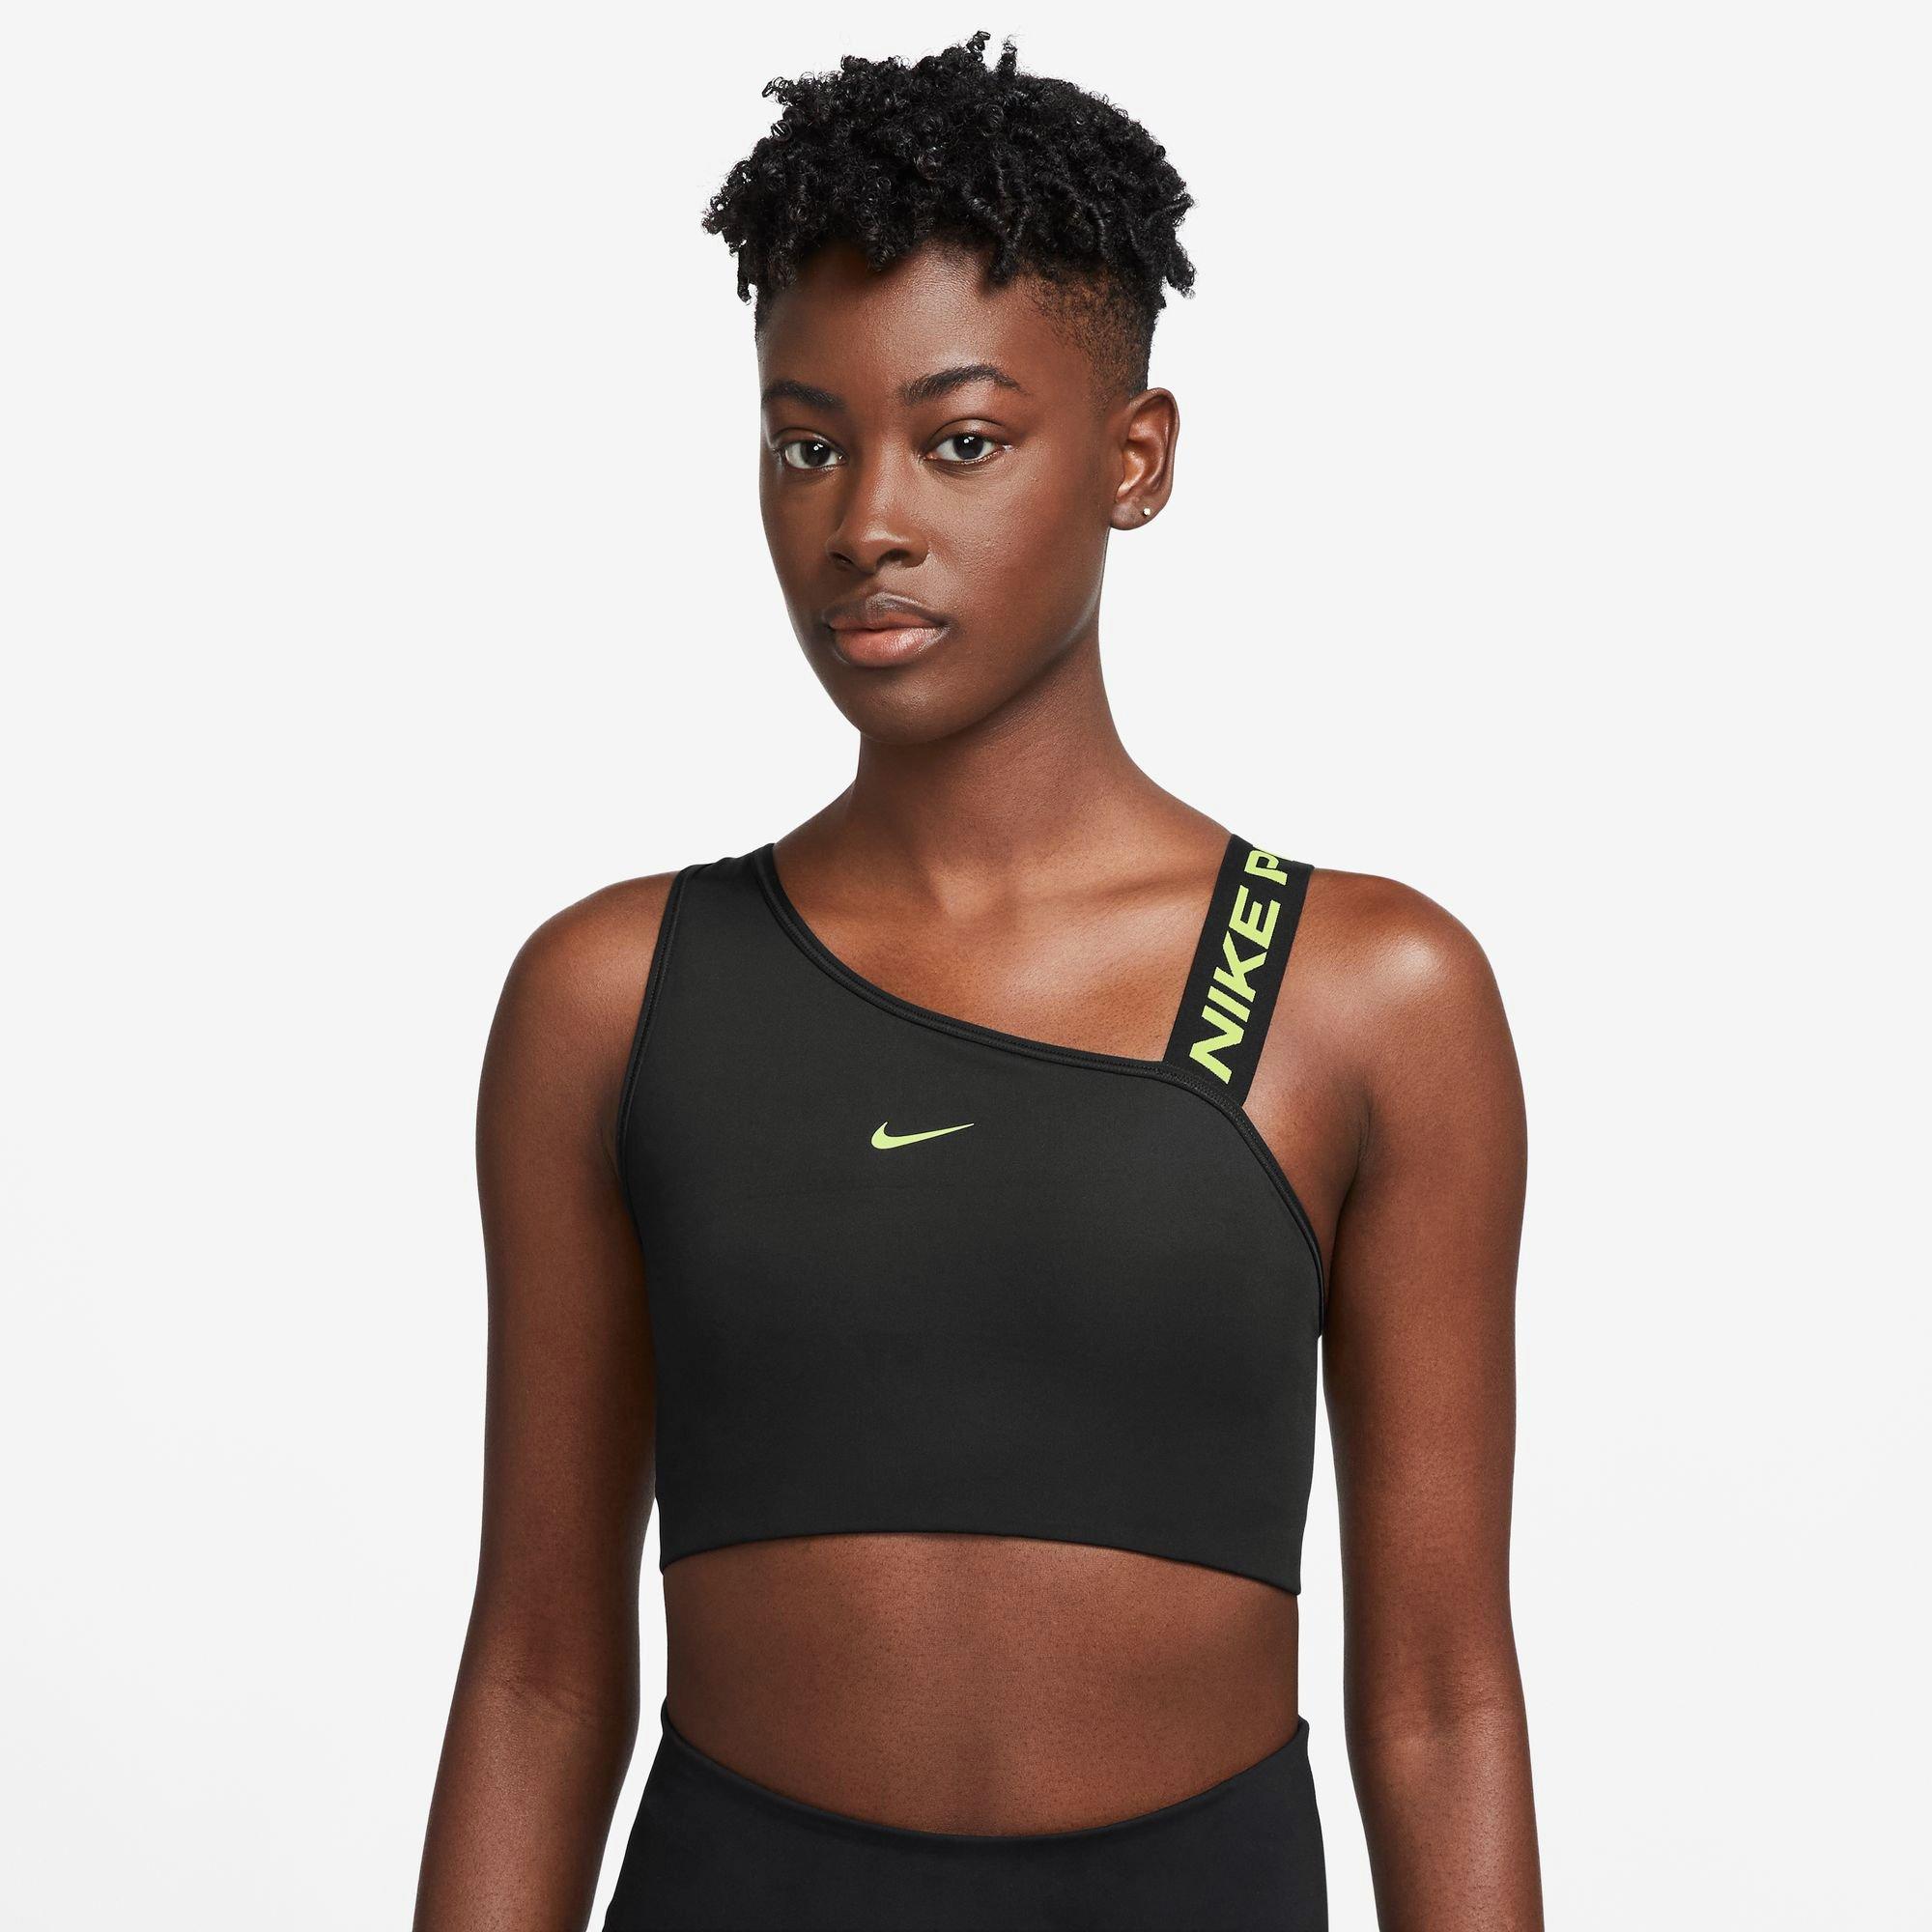 Nike Medium Swoosh-detail Sports Bra - Farfetch